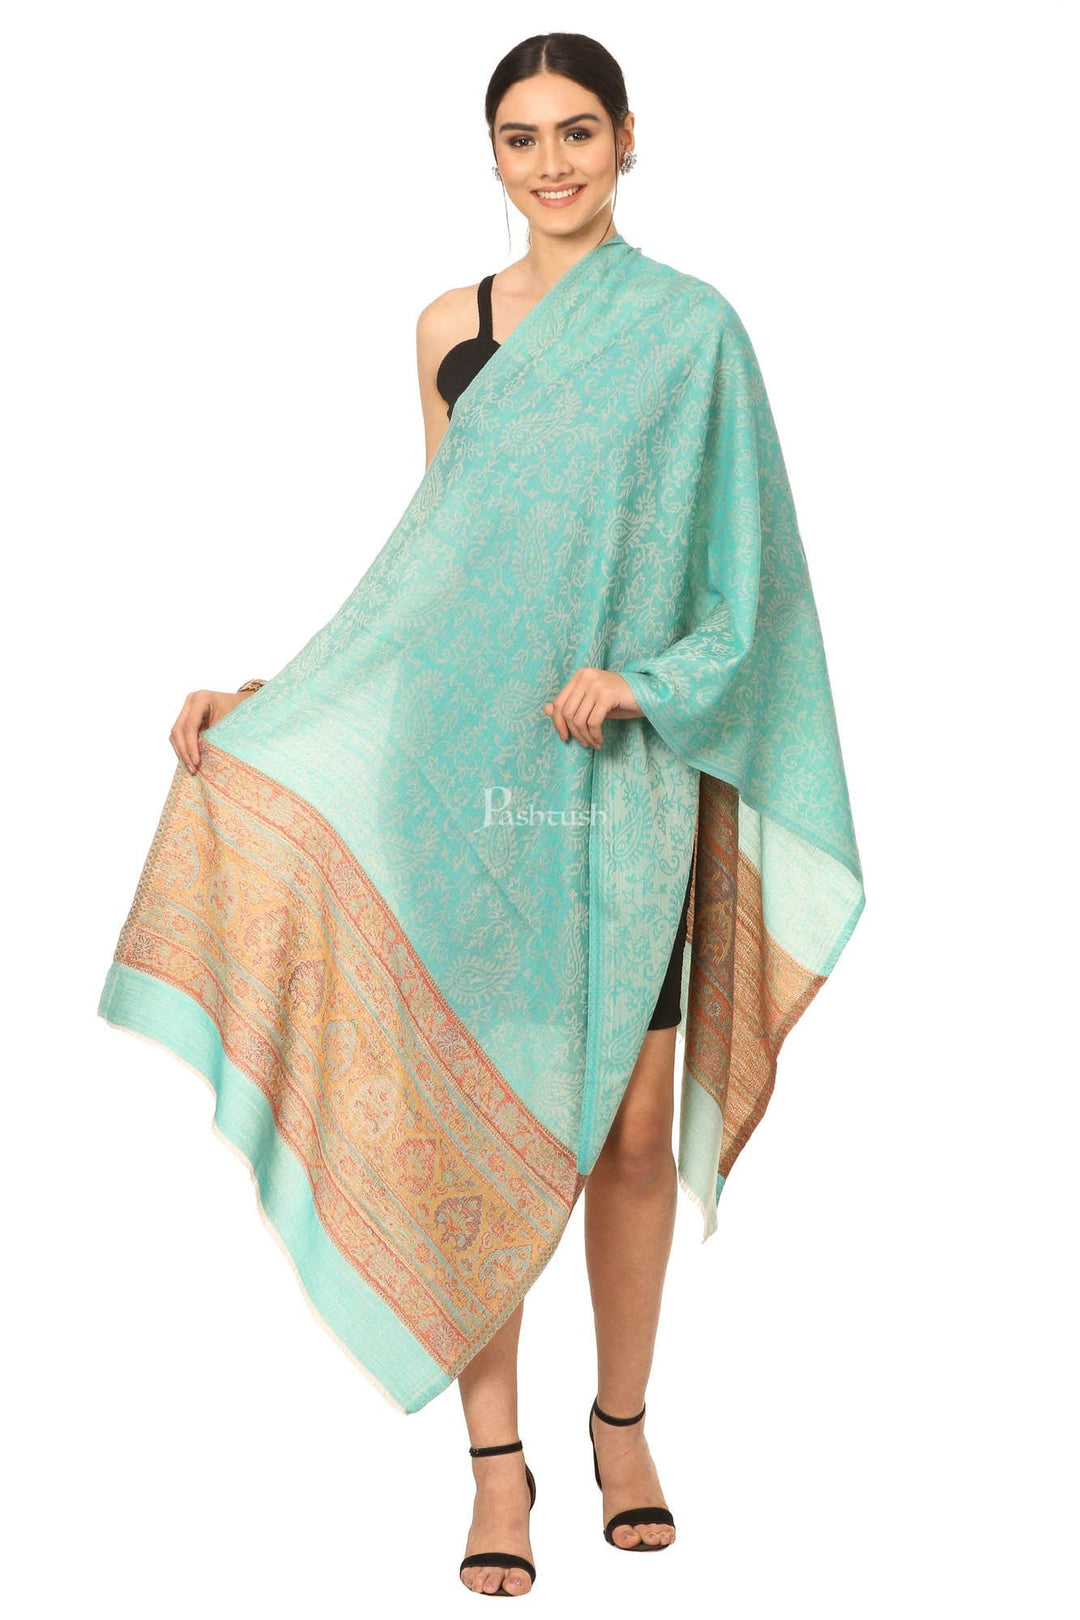 Pashtush India Womens Stoles and Scarves Scarf Pashtush Fine Wool Luxury Striped Design Scarf, Stole, Weaving Design - Sea Green